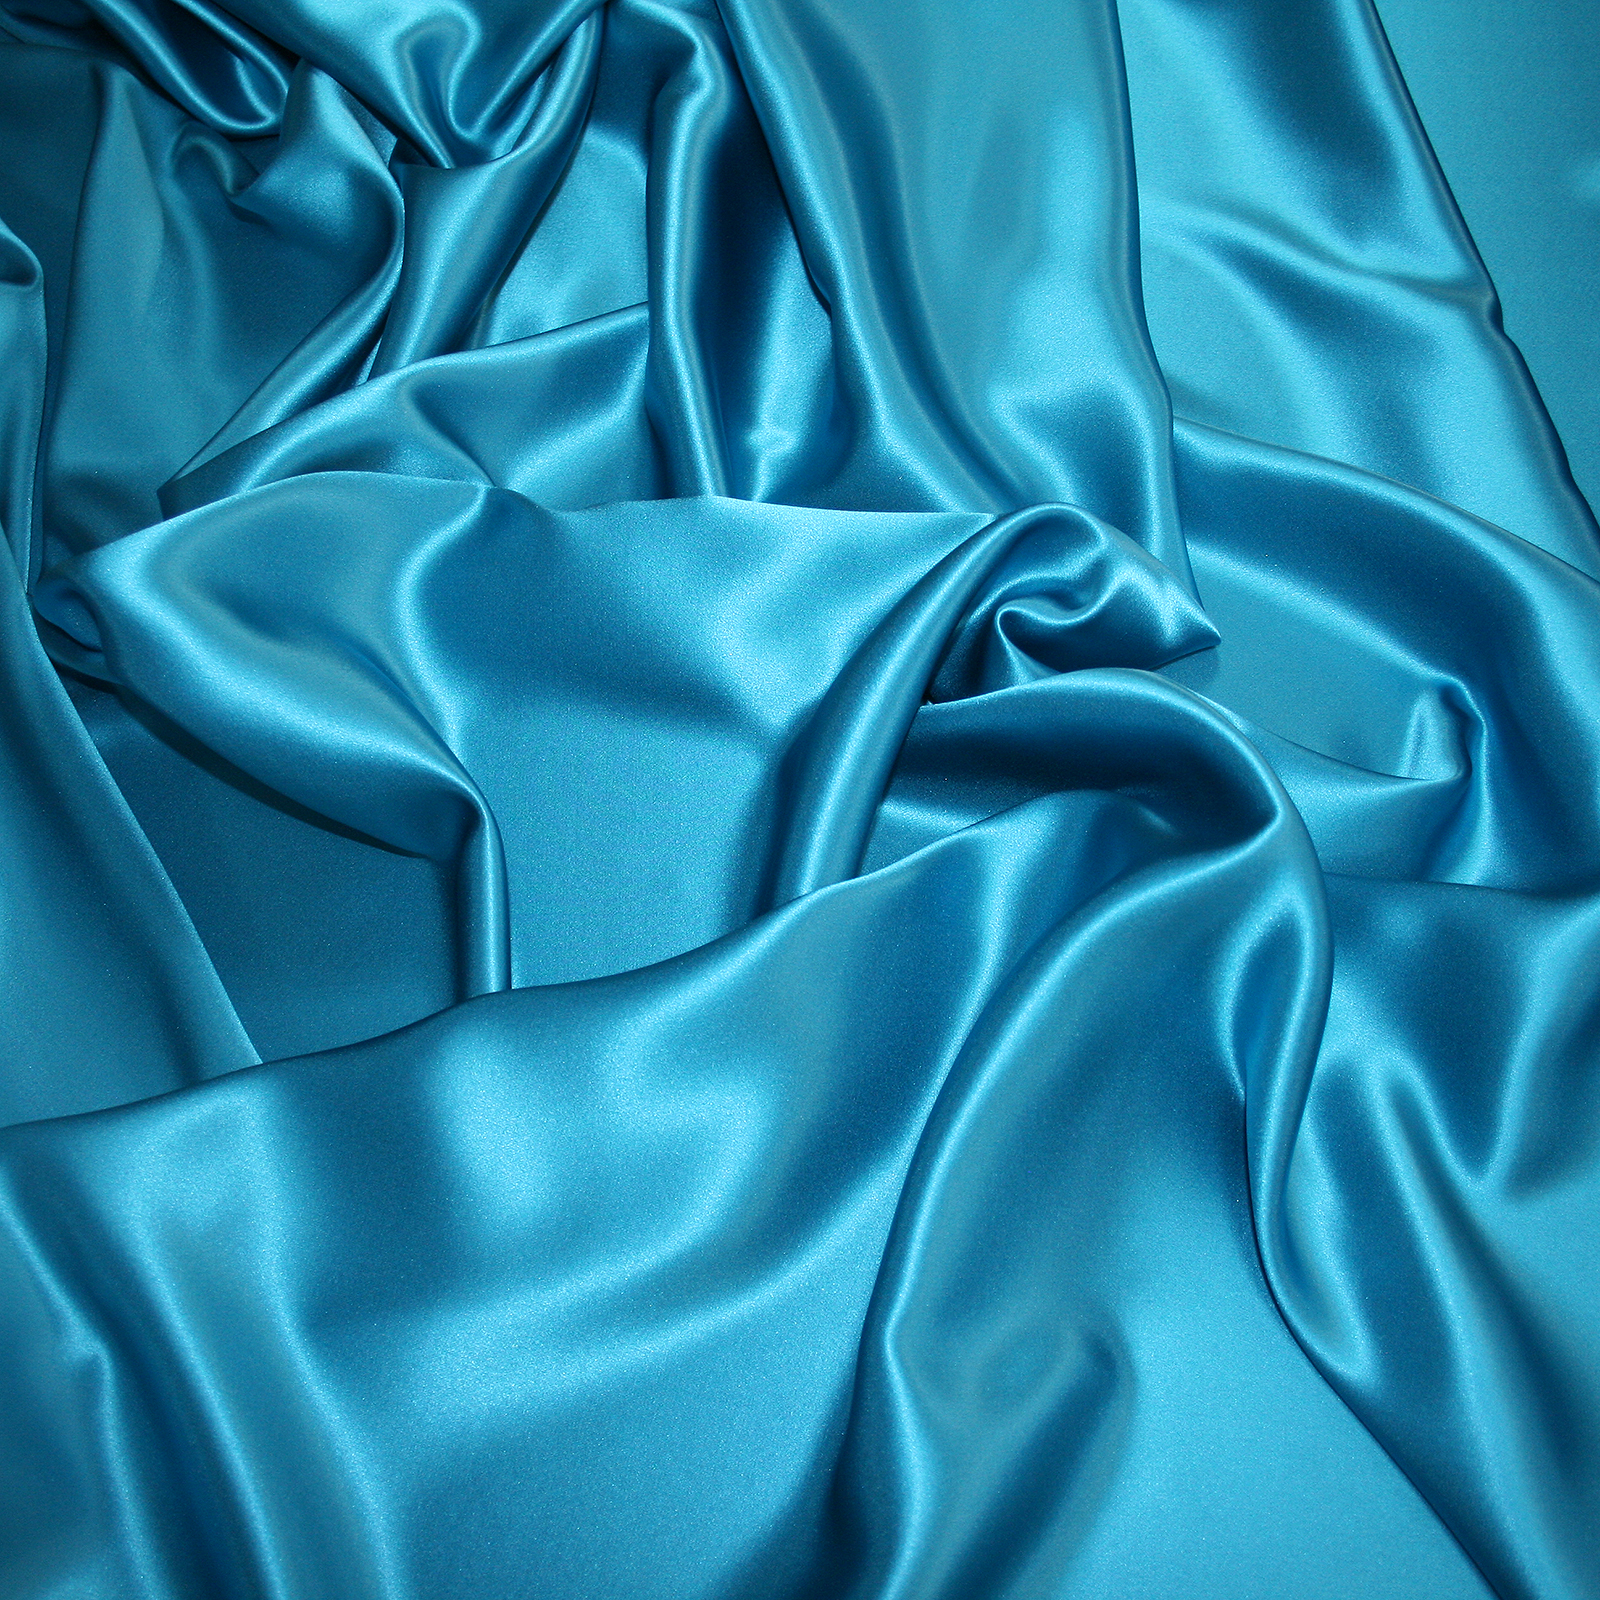 blue silk satin fabric